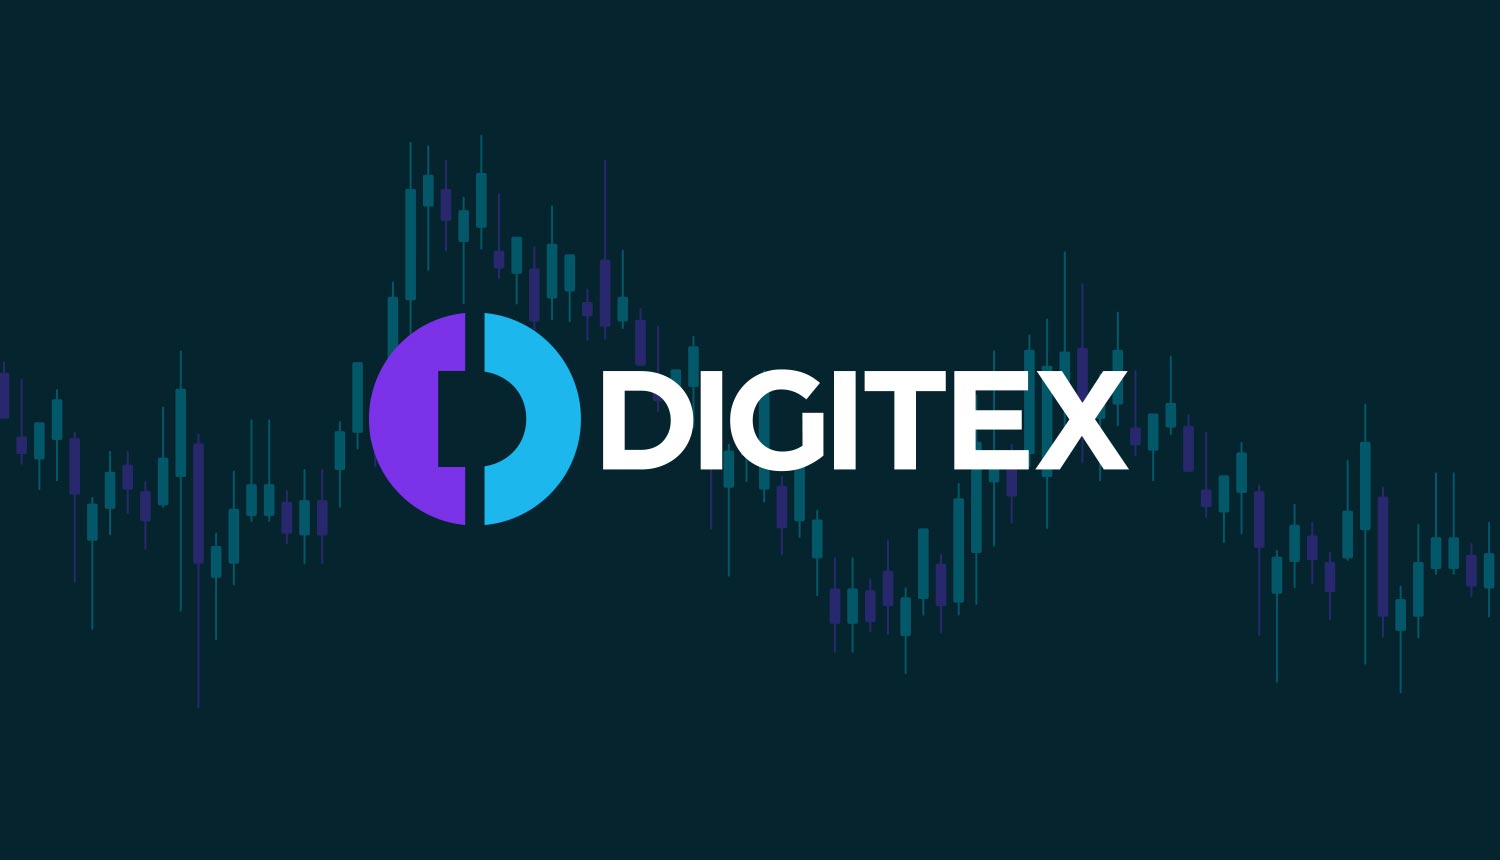  futures digitex commission-free exchange version beta crypto 